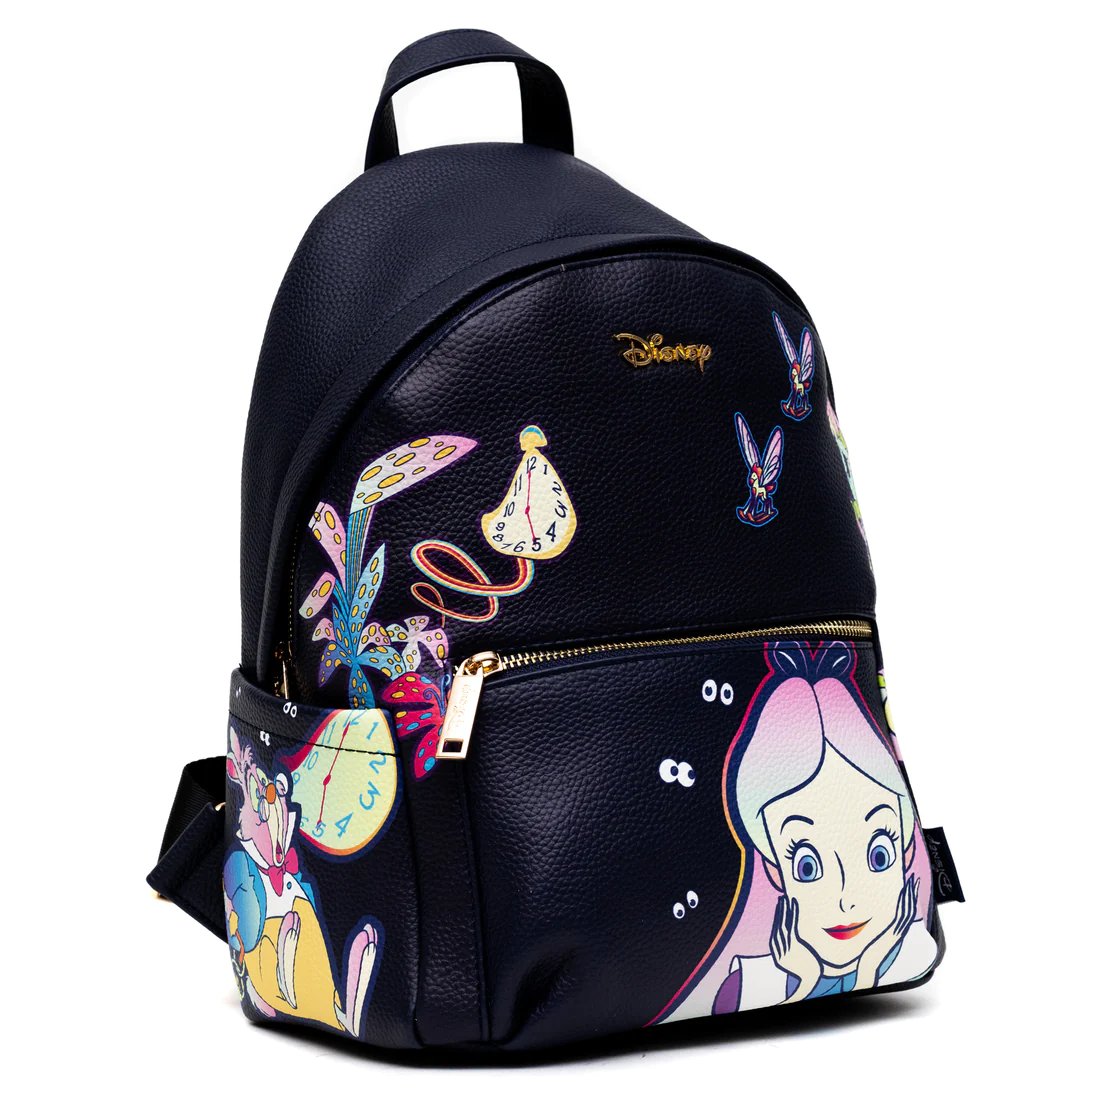 Wondapop High Fashion Disney Alice in Wonderland Mini Backpack - Alternate Side View